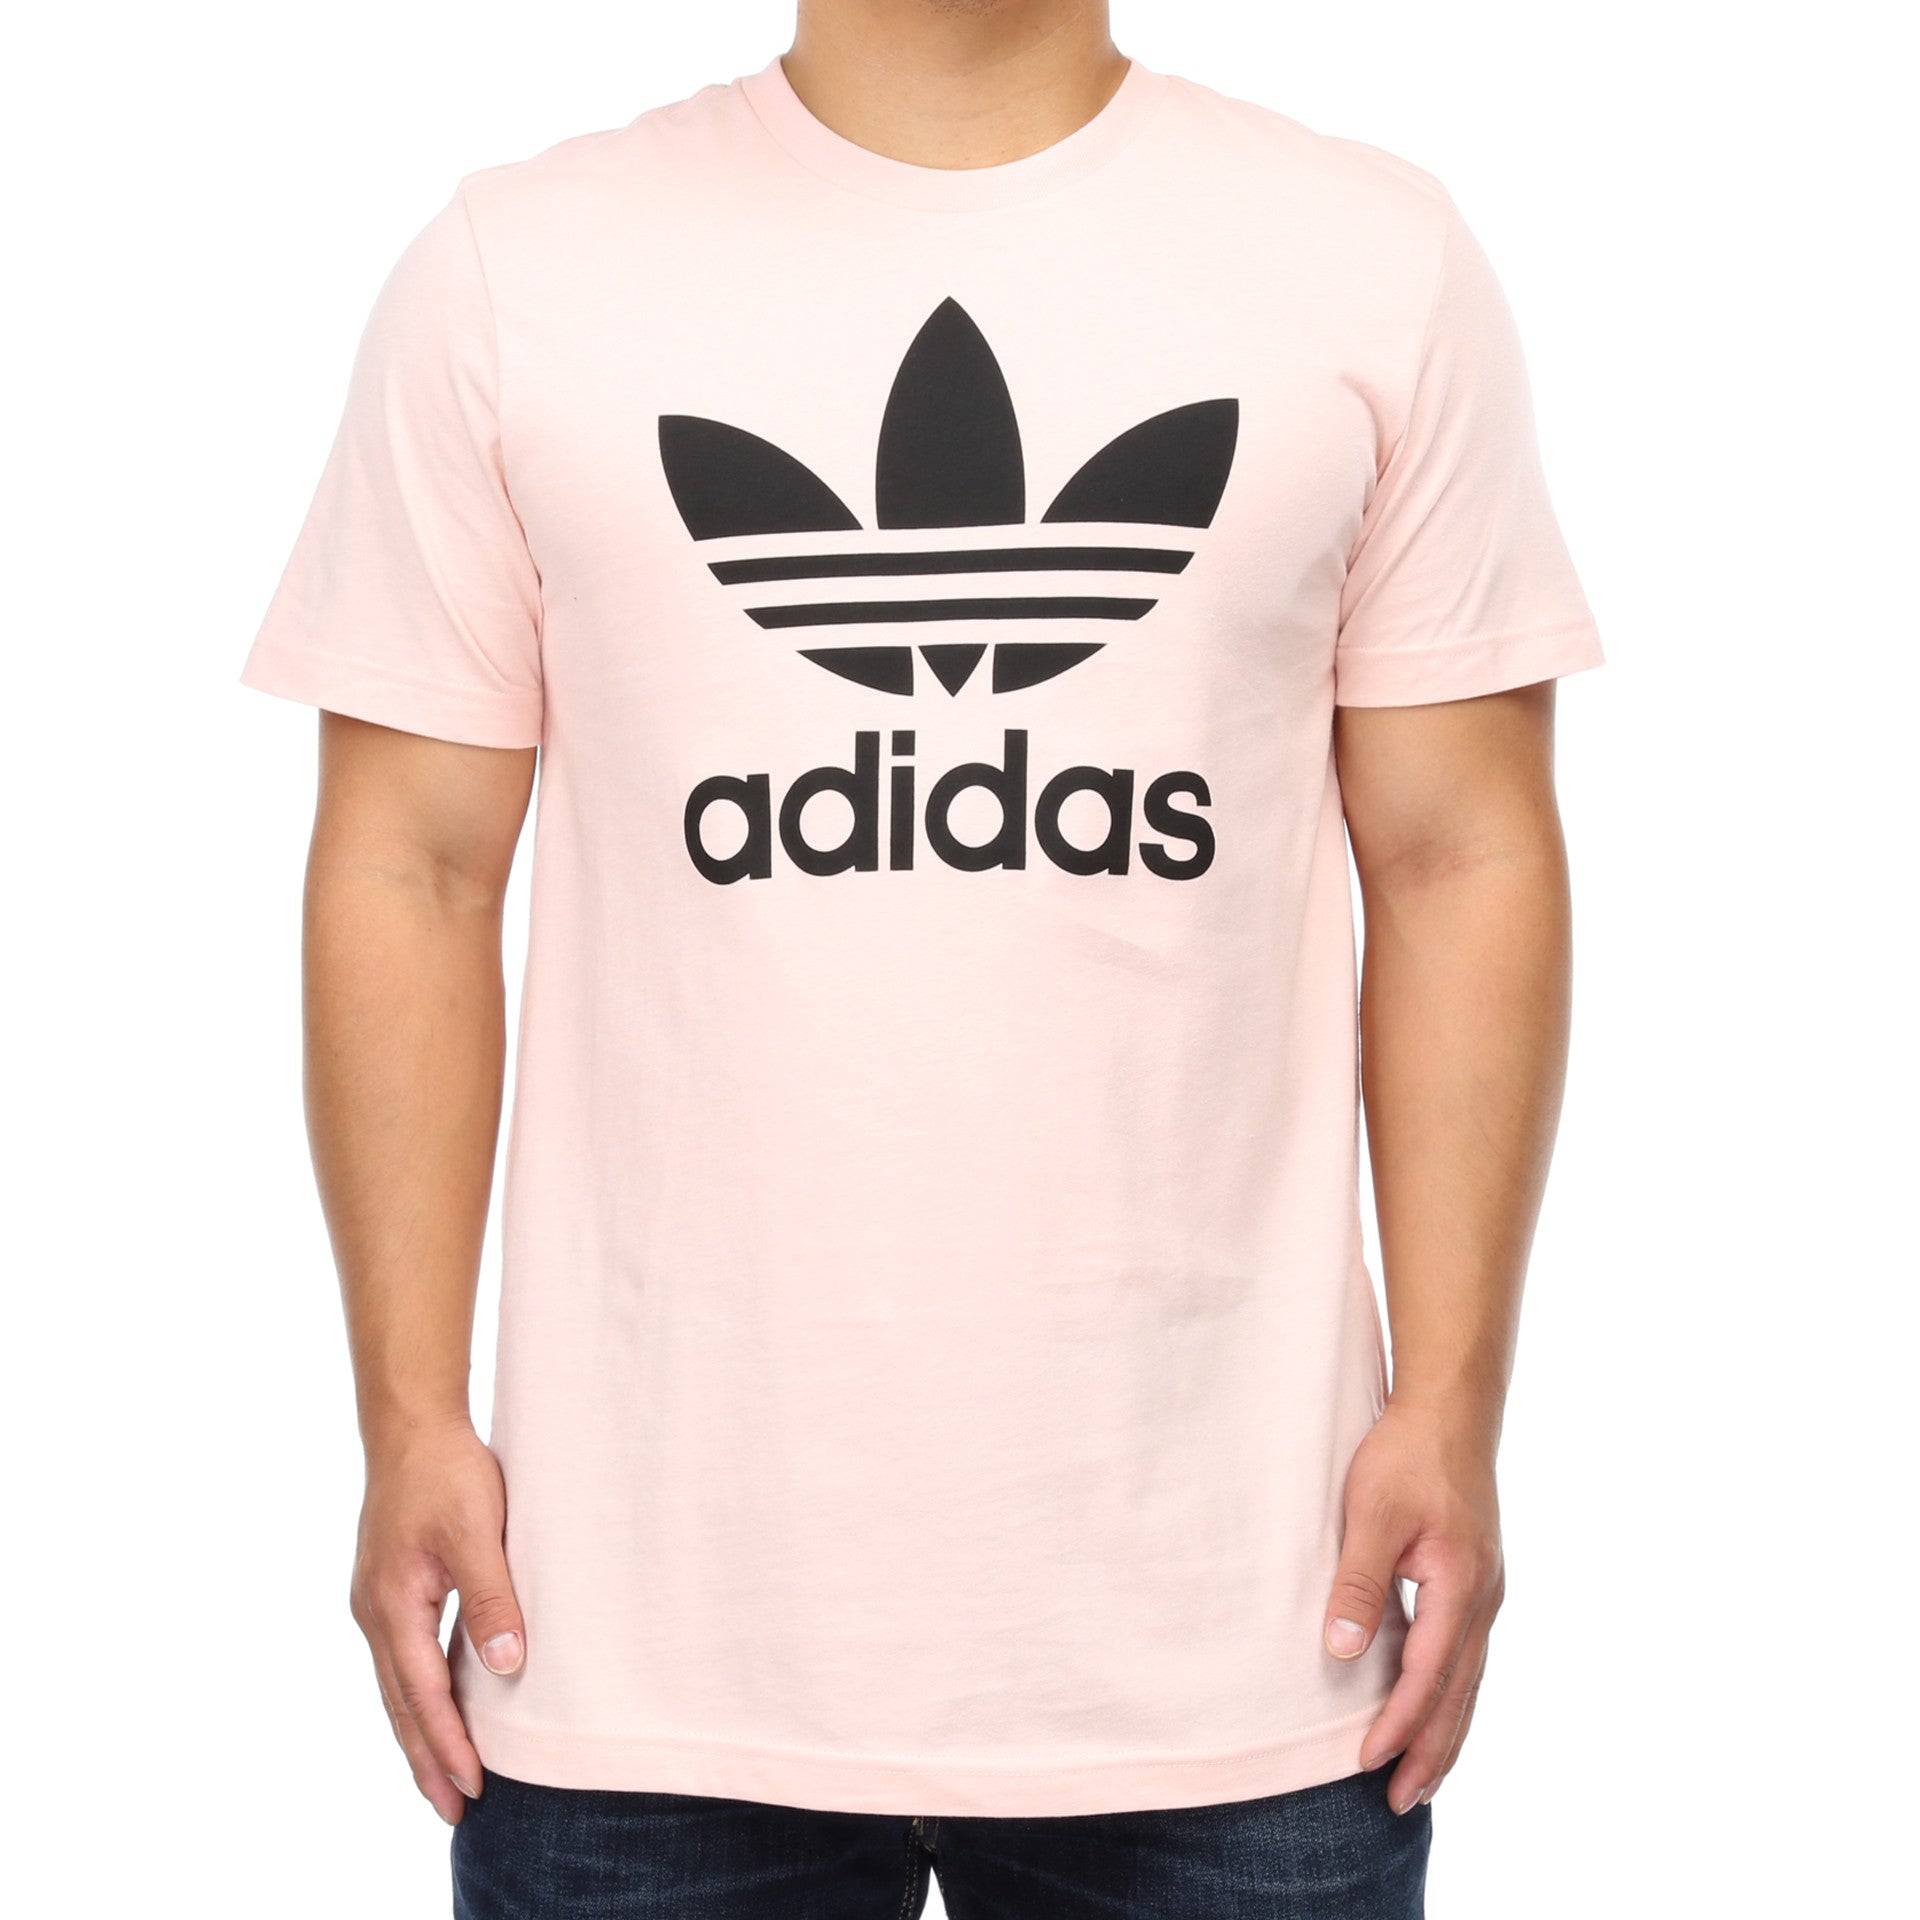 Adidas Original Trefoil Tee - Pink - Star